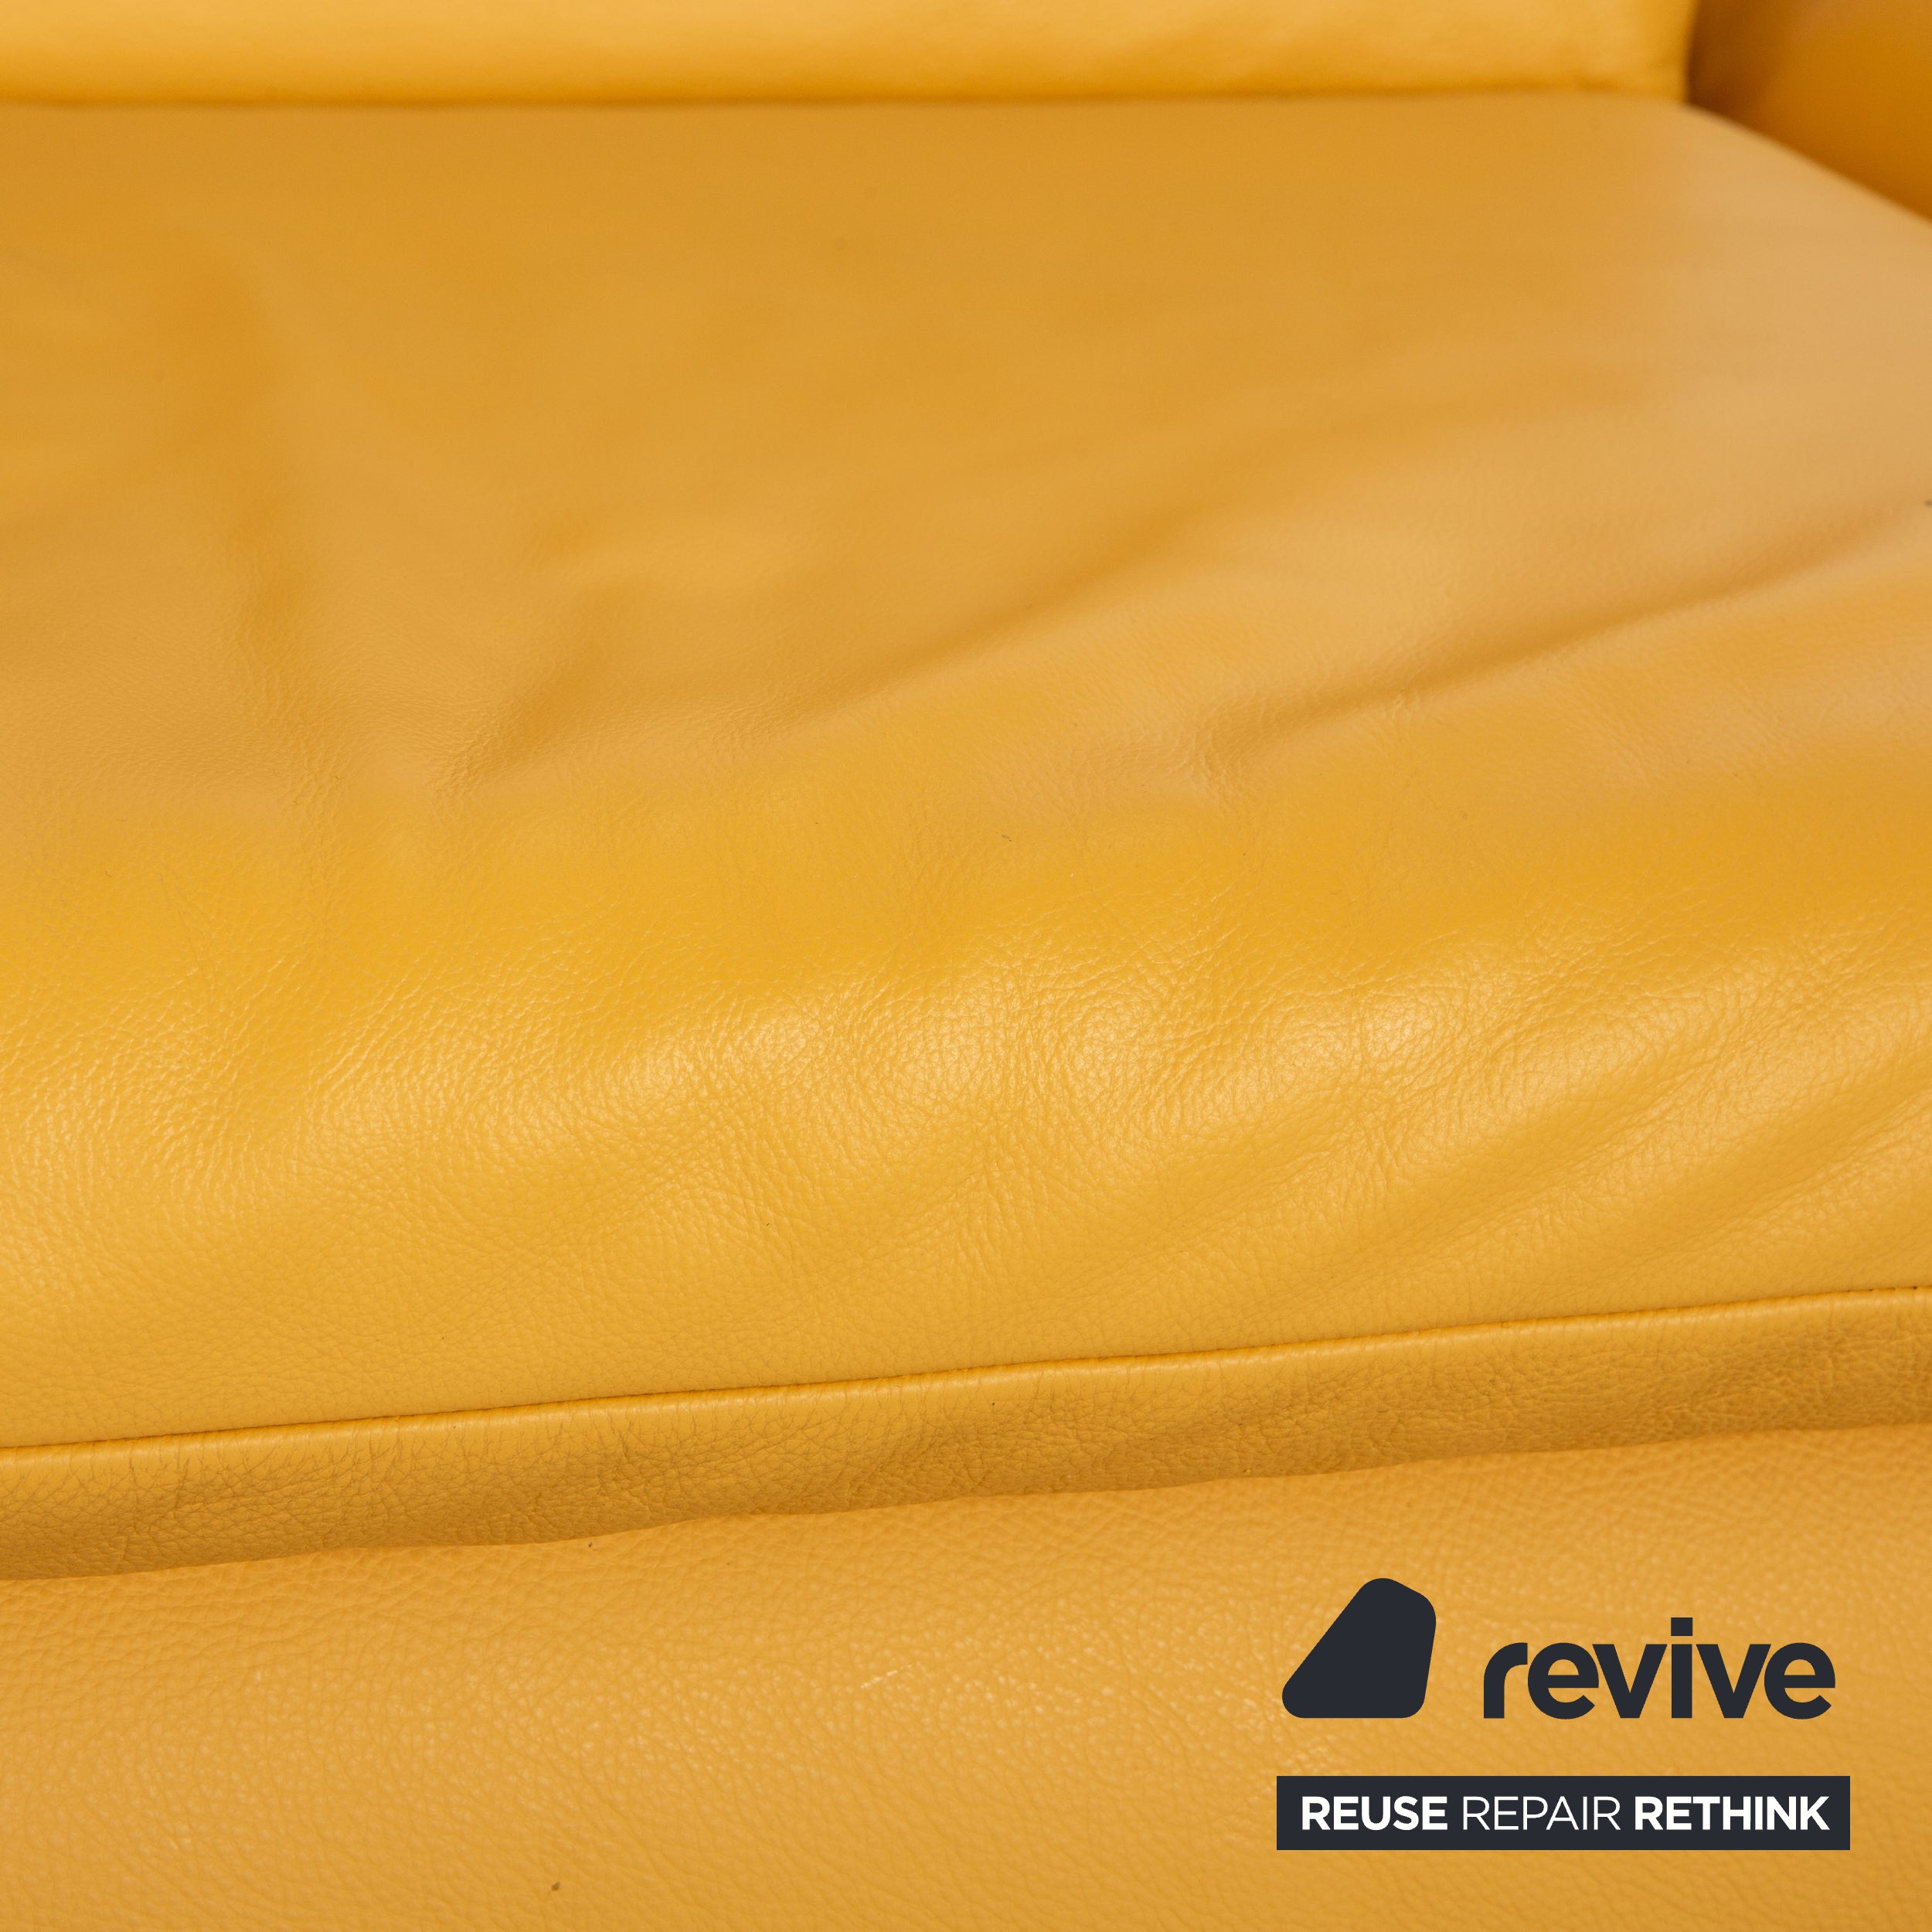 Koinor Rossini Leder Zweisitzer Gelb manuelle Funktion Sofa Couch